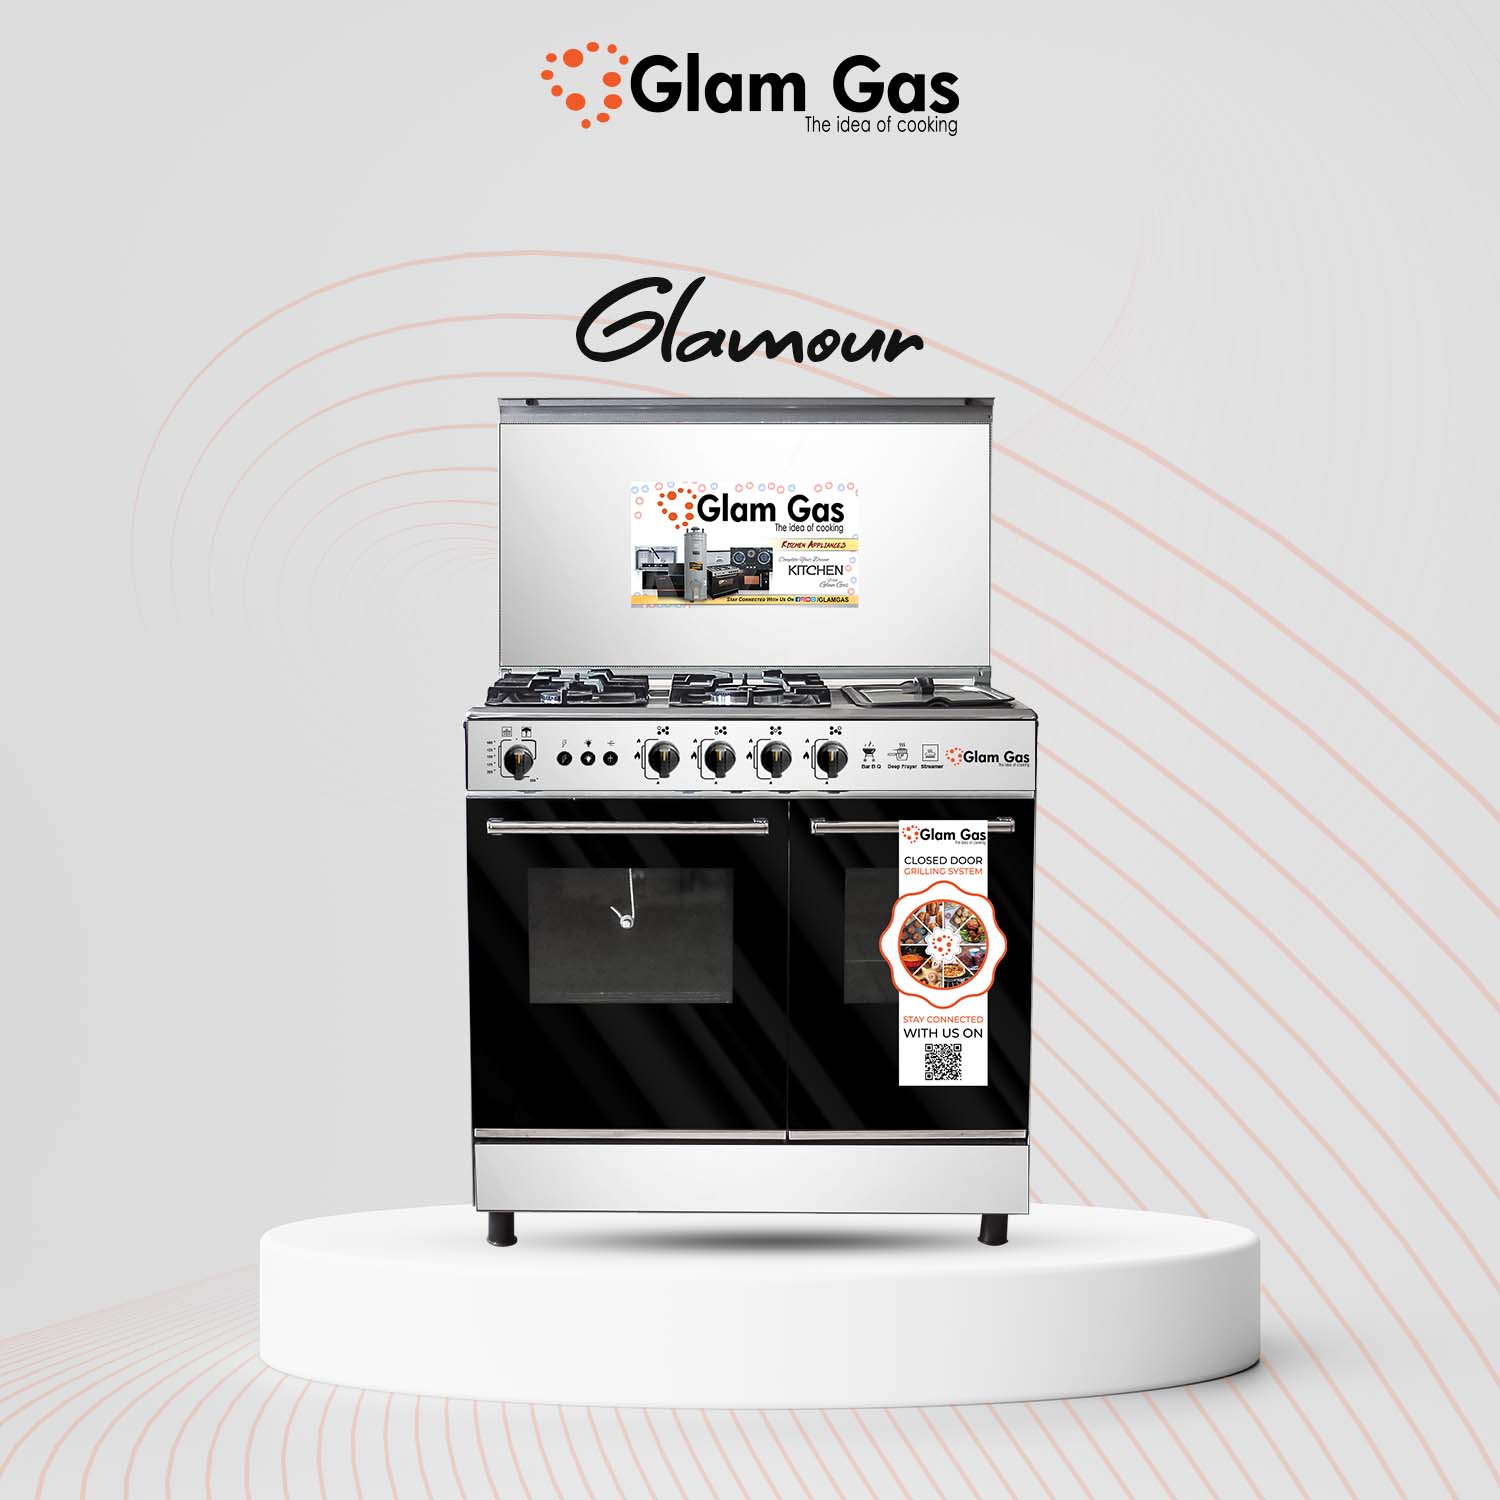 Buy Glamgas Glamour |cooking range gas-cooking range electric in Price